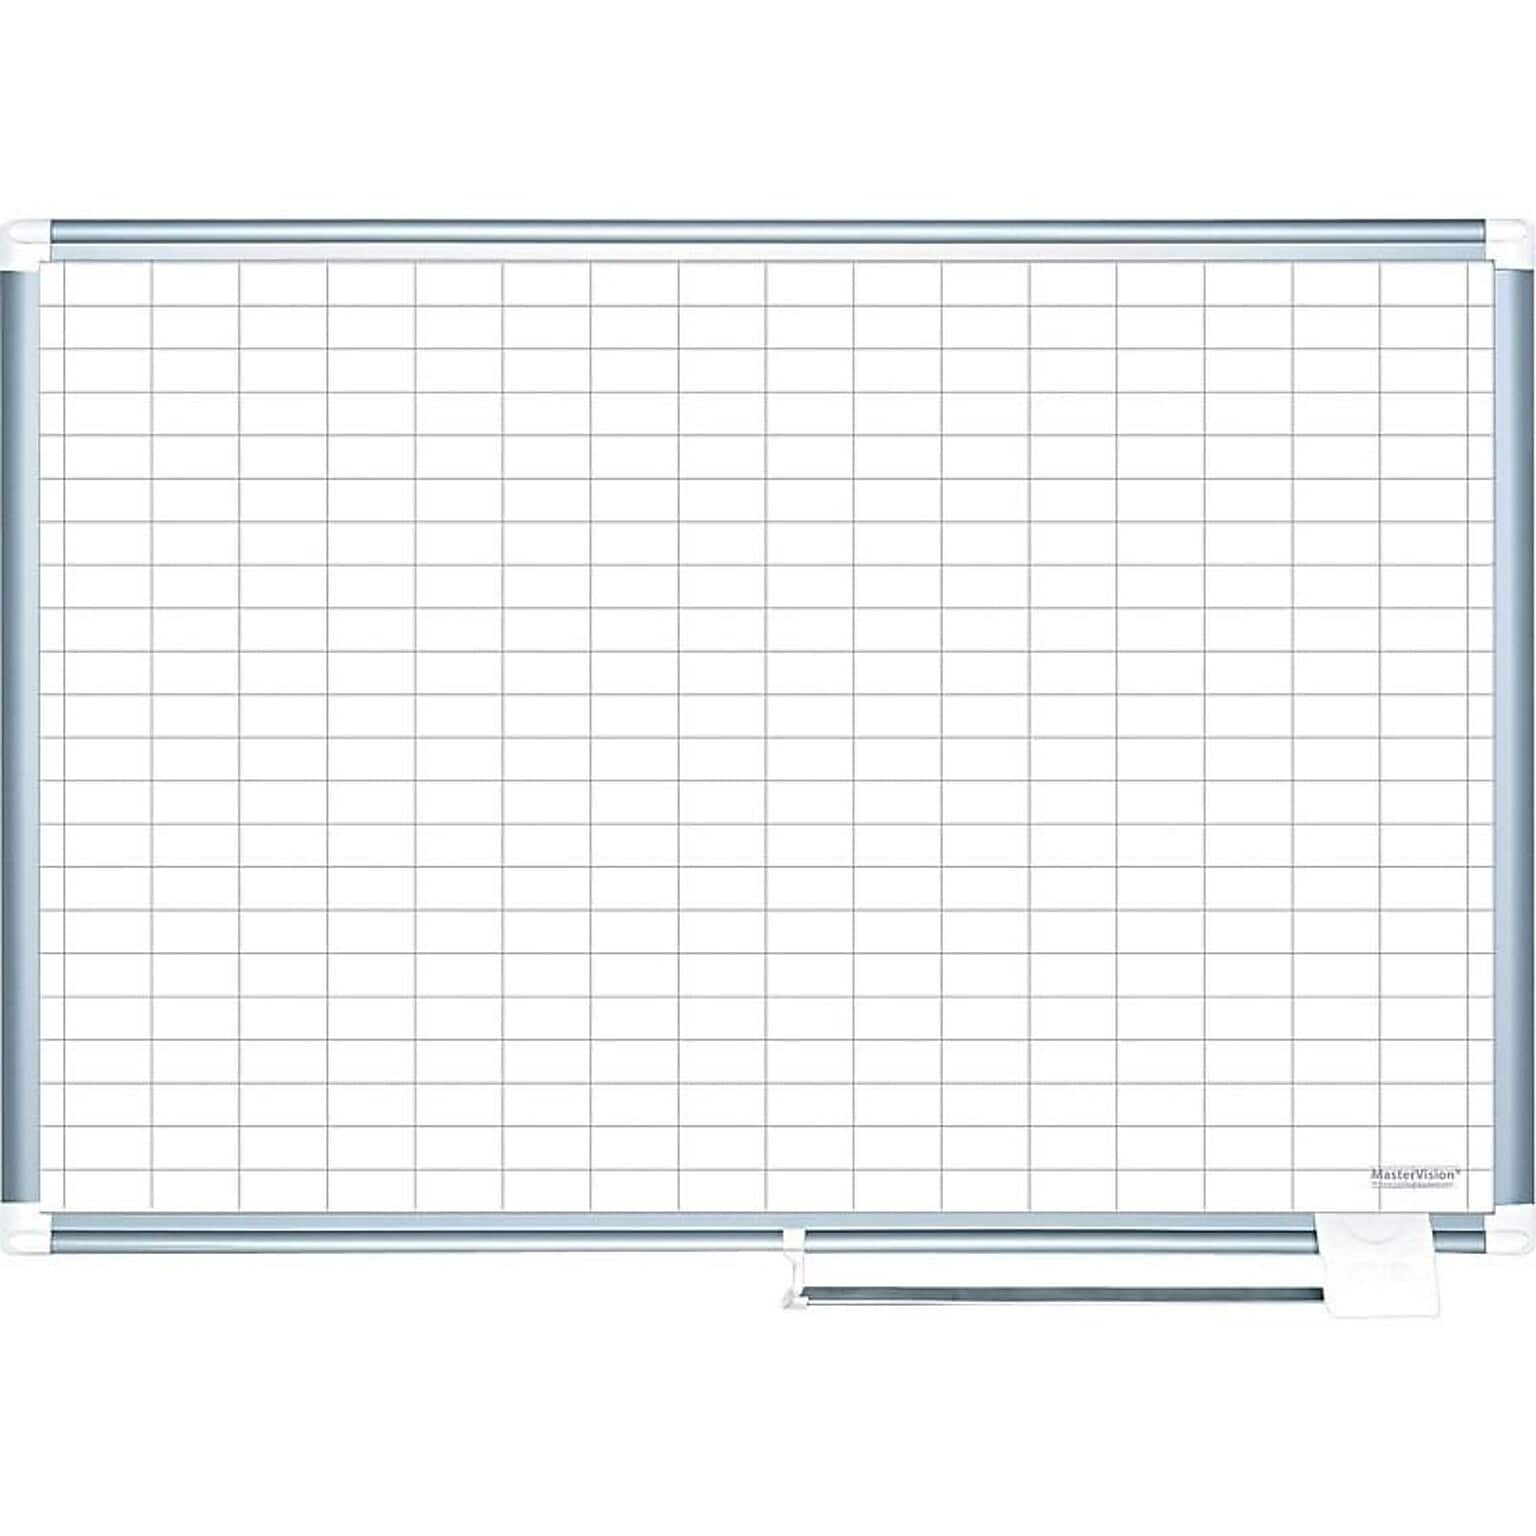 MasterVision Enamel Dry-Erase Whiteboard, Aluminum Frame, 6 x 4 (CR1230830A)